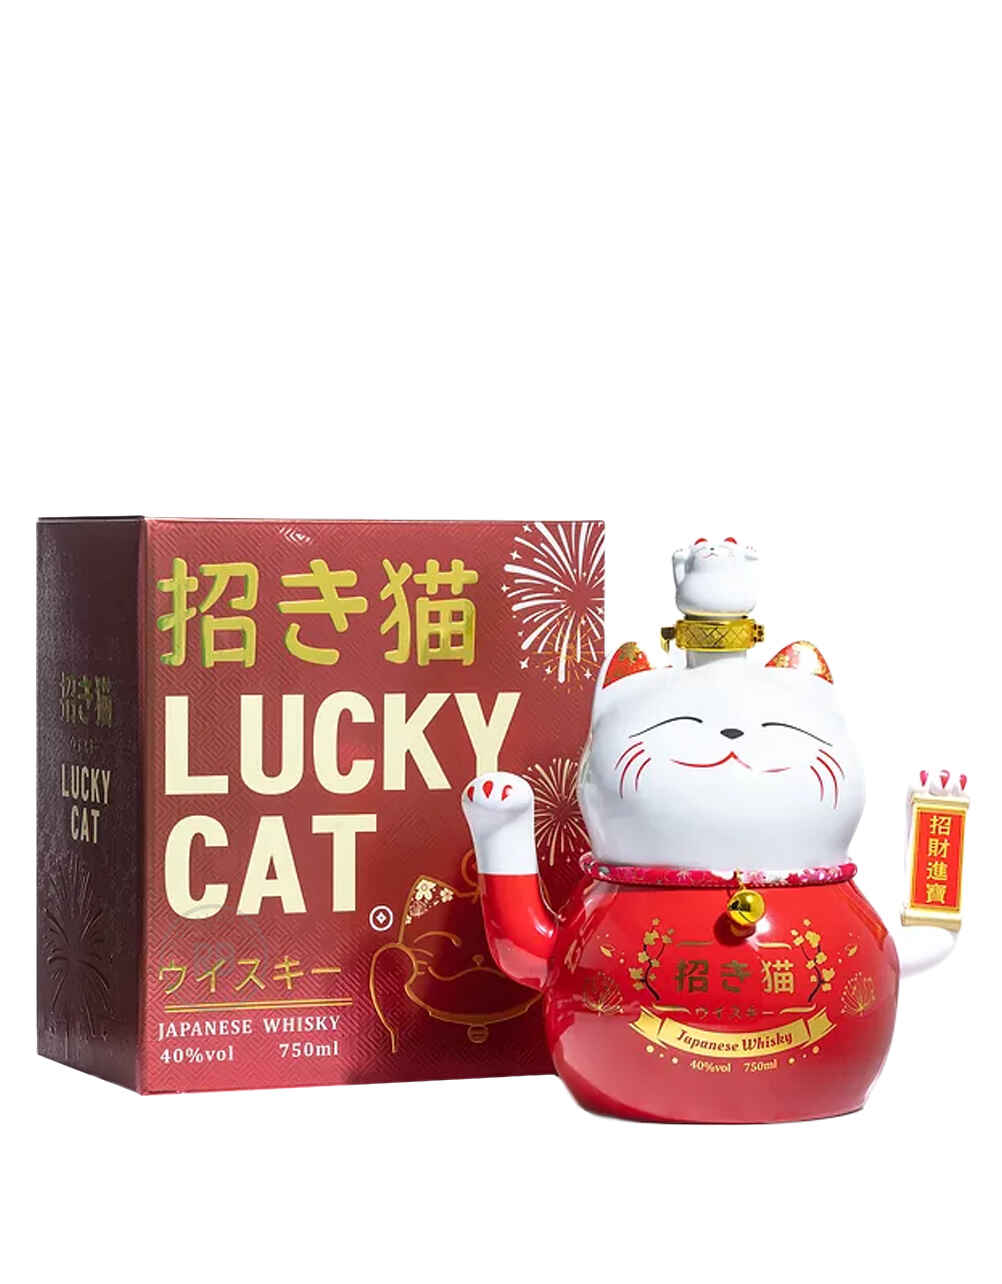 Lucky Cat Maneki Neko Japanese Whisky